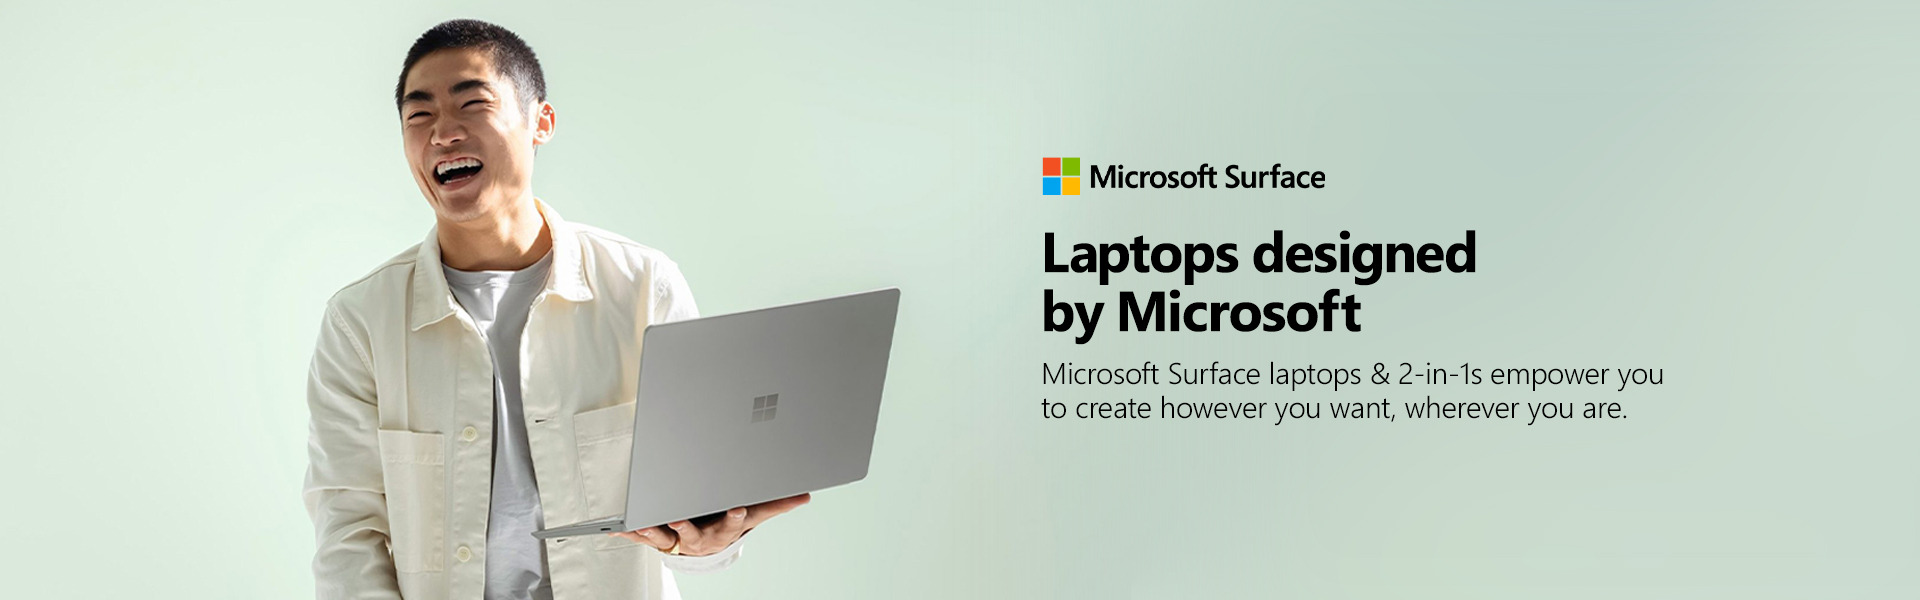 Microsoft Surface Laptopgo2 06.06.banner Main